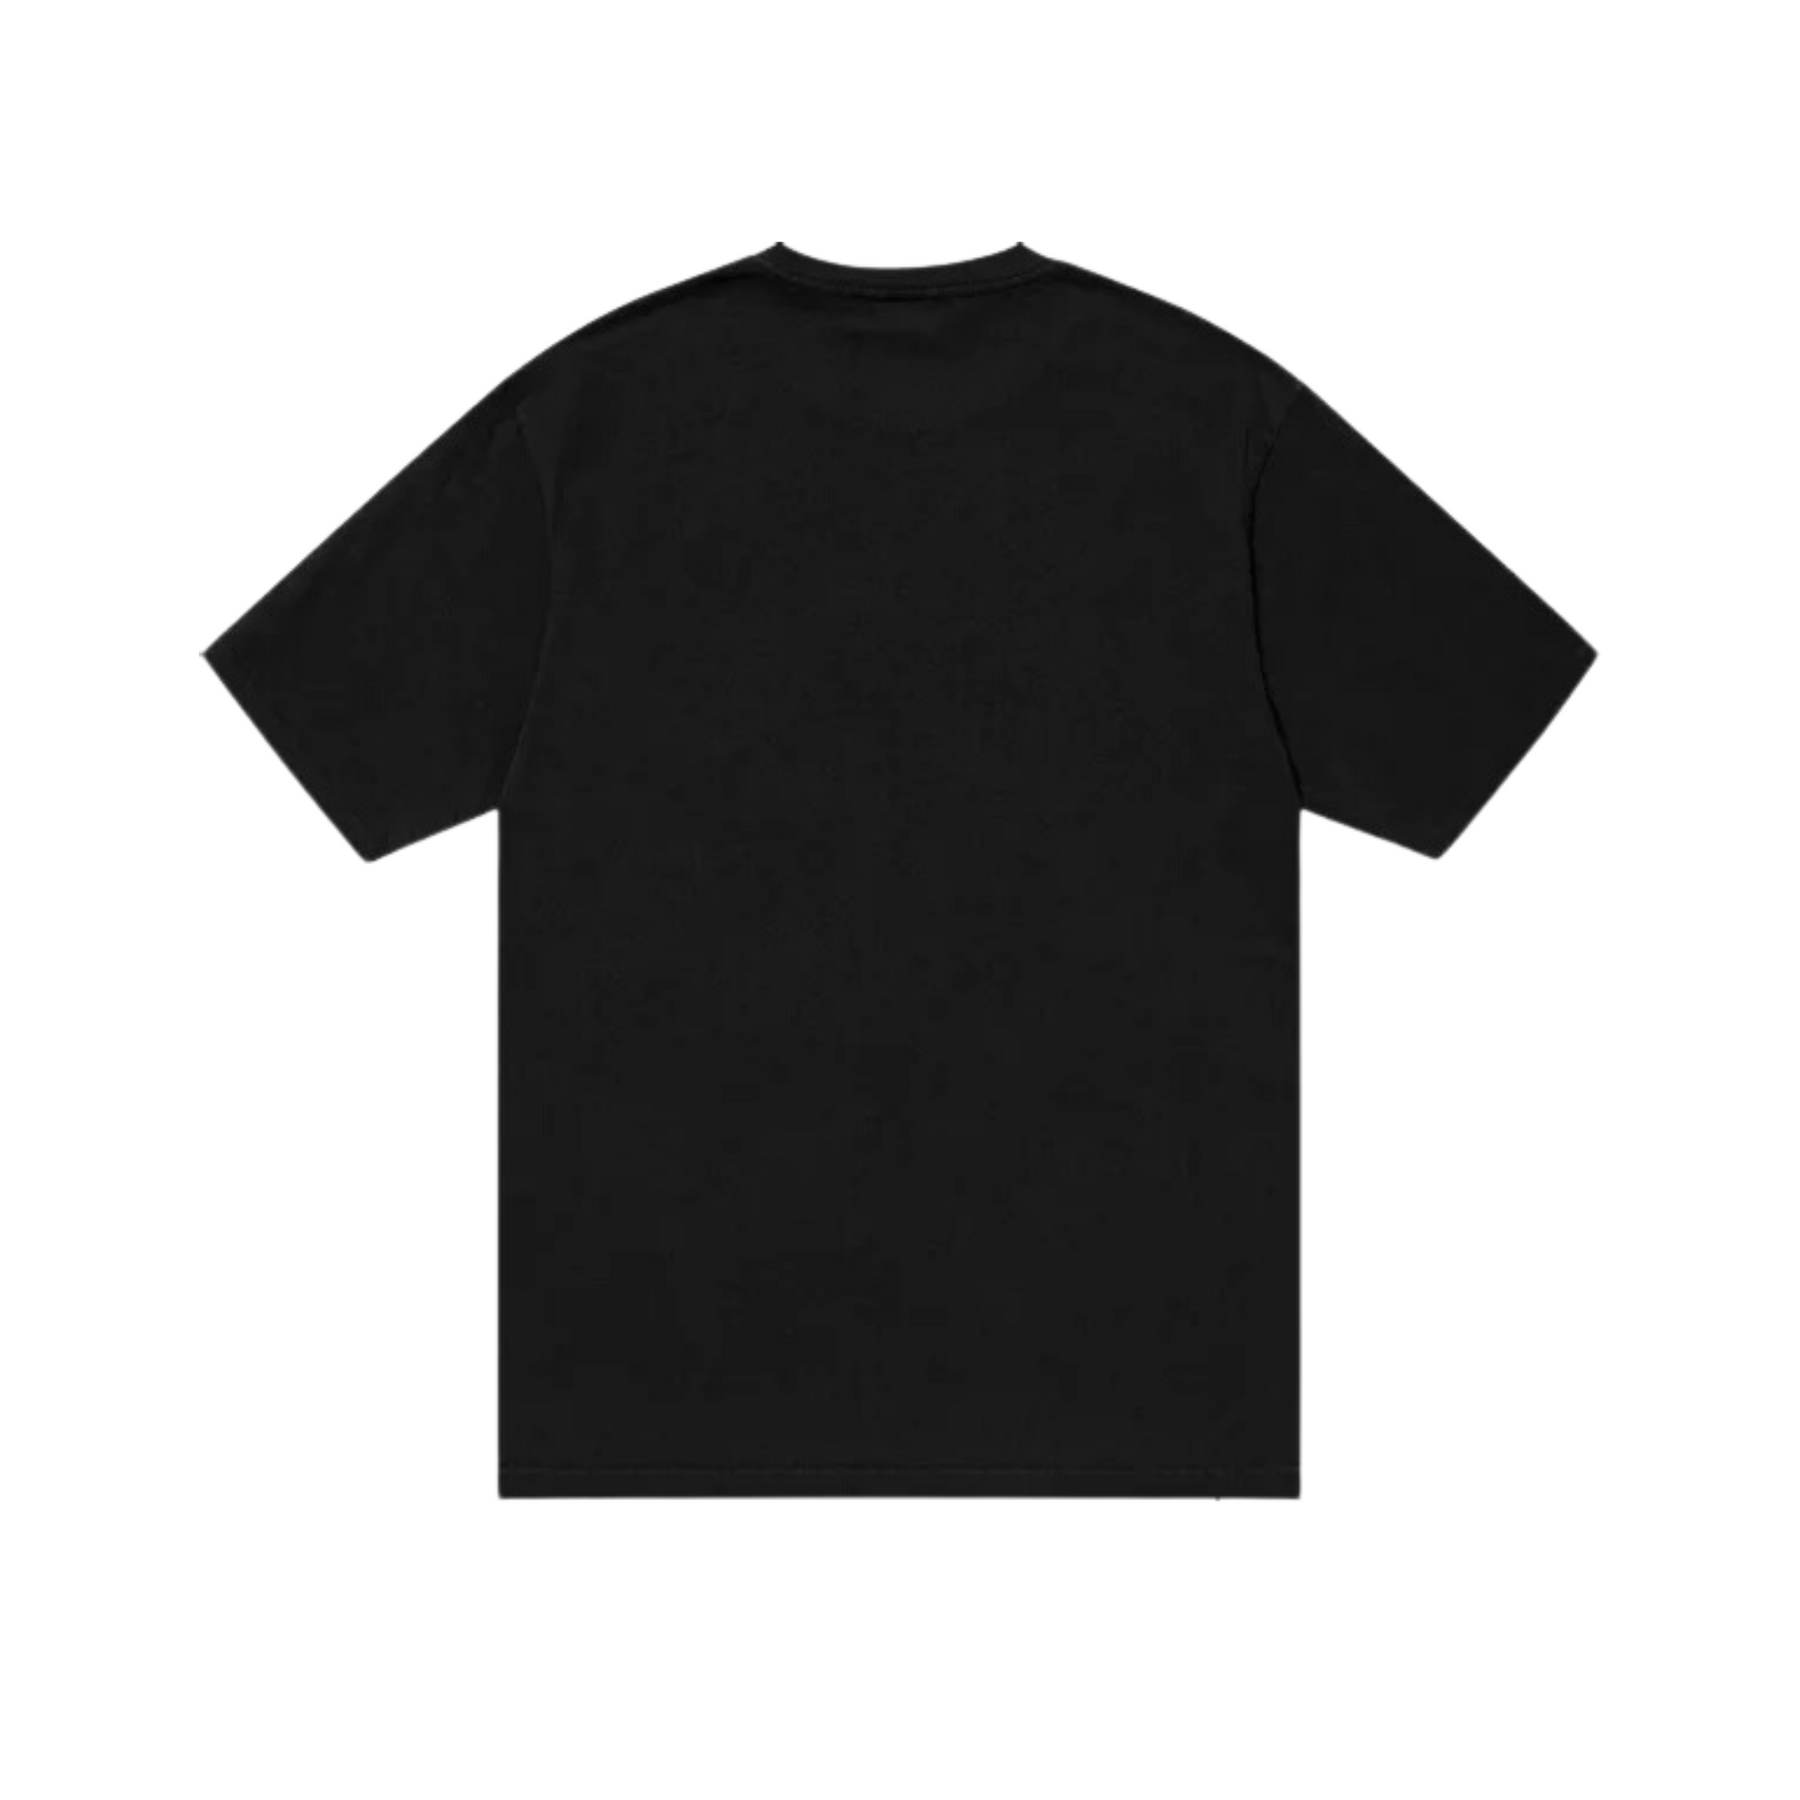 Stüssy Big & Meaty Pigment Dyed T-Shirt "Black"